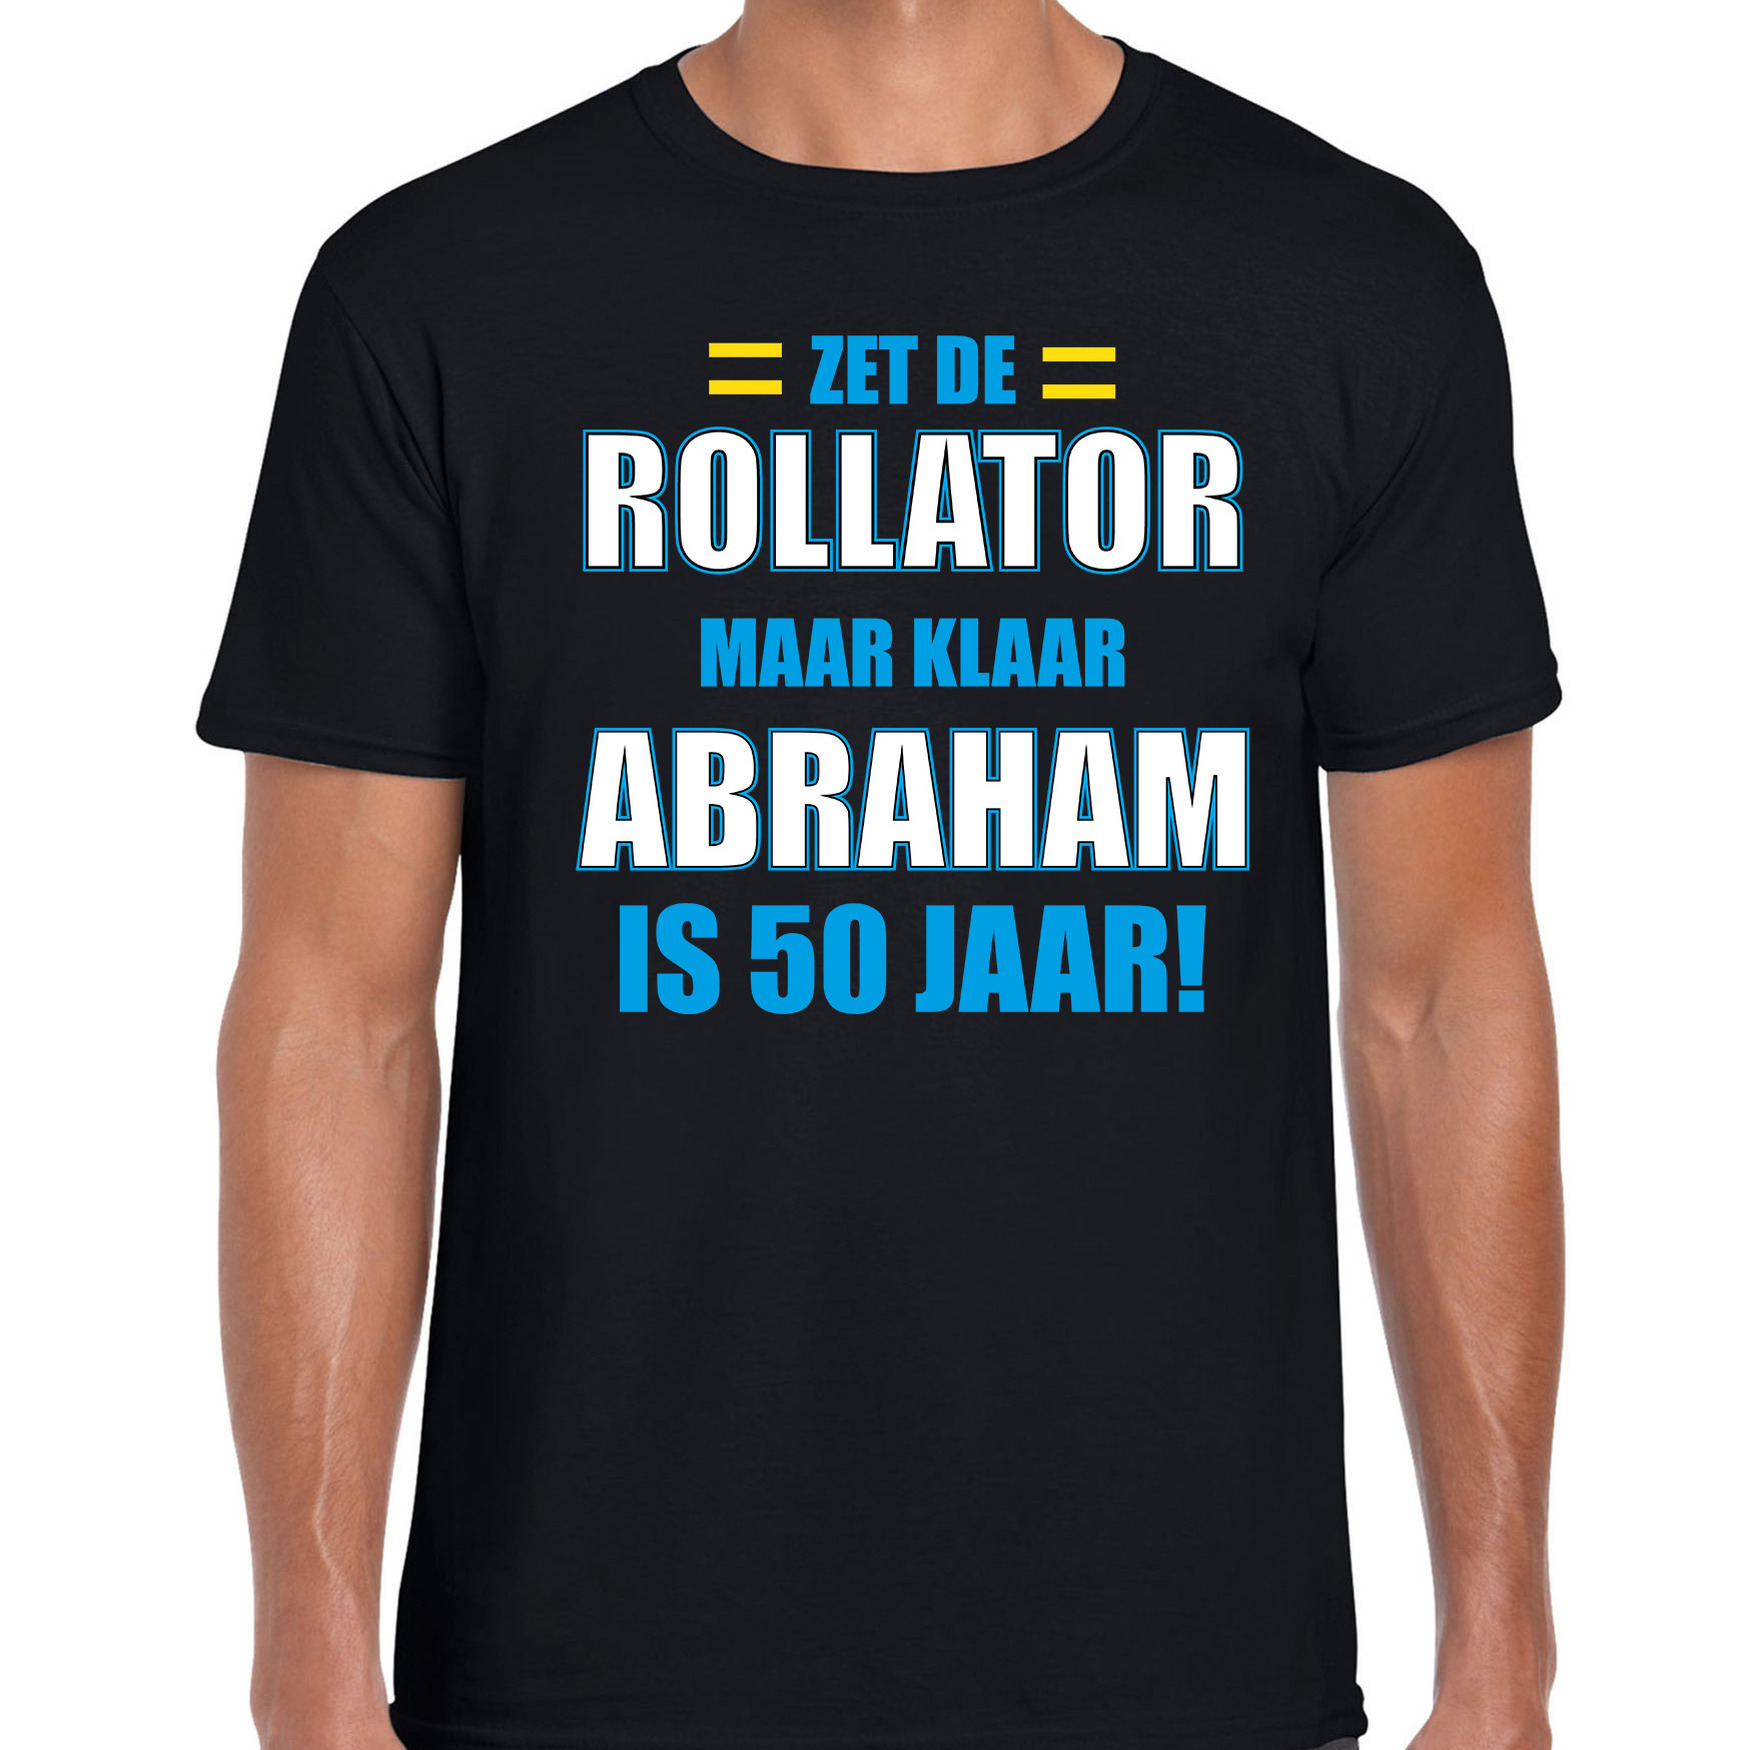 Rollator 50 jaar verjaardag t-shirt Abraham zwart heren cadeau shirt